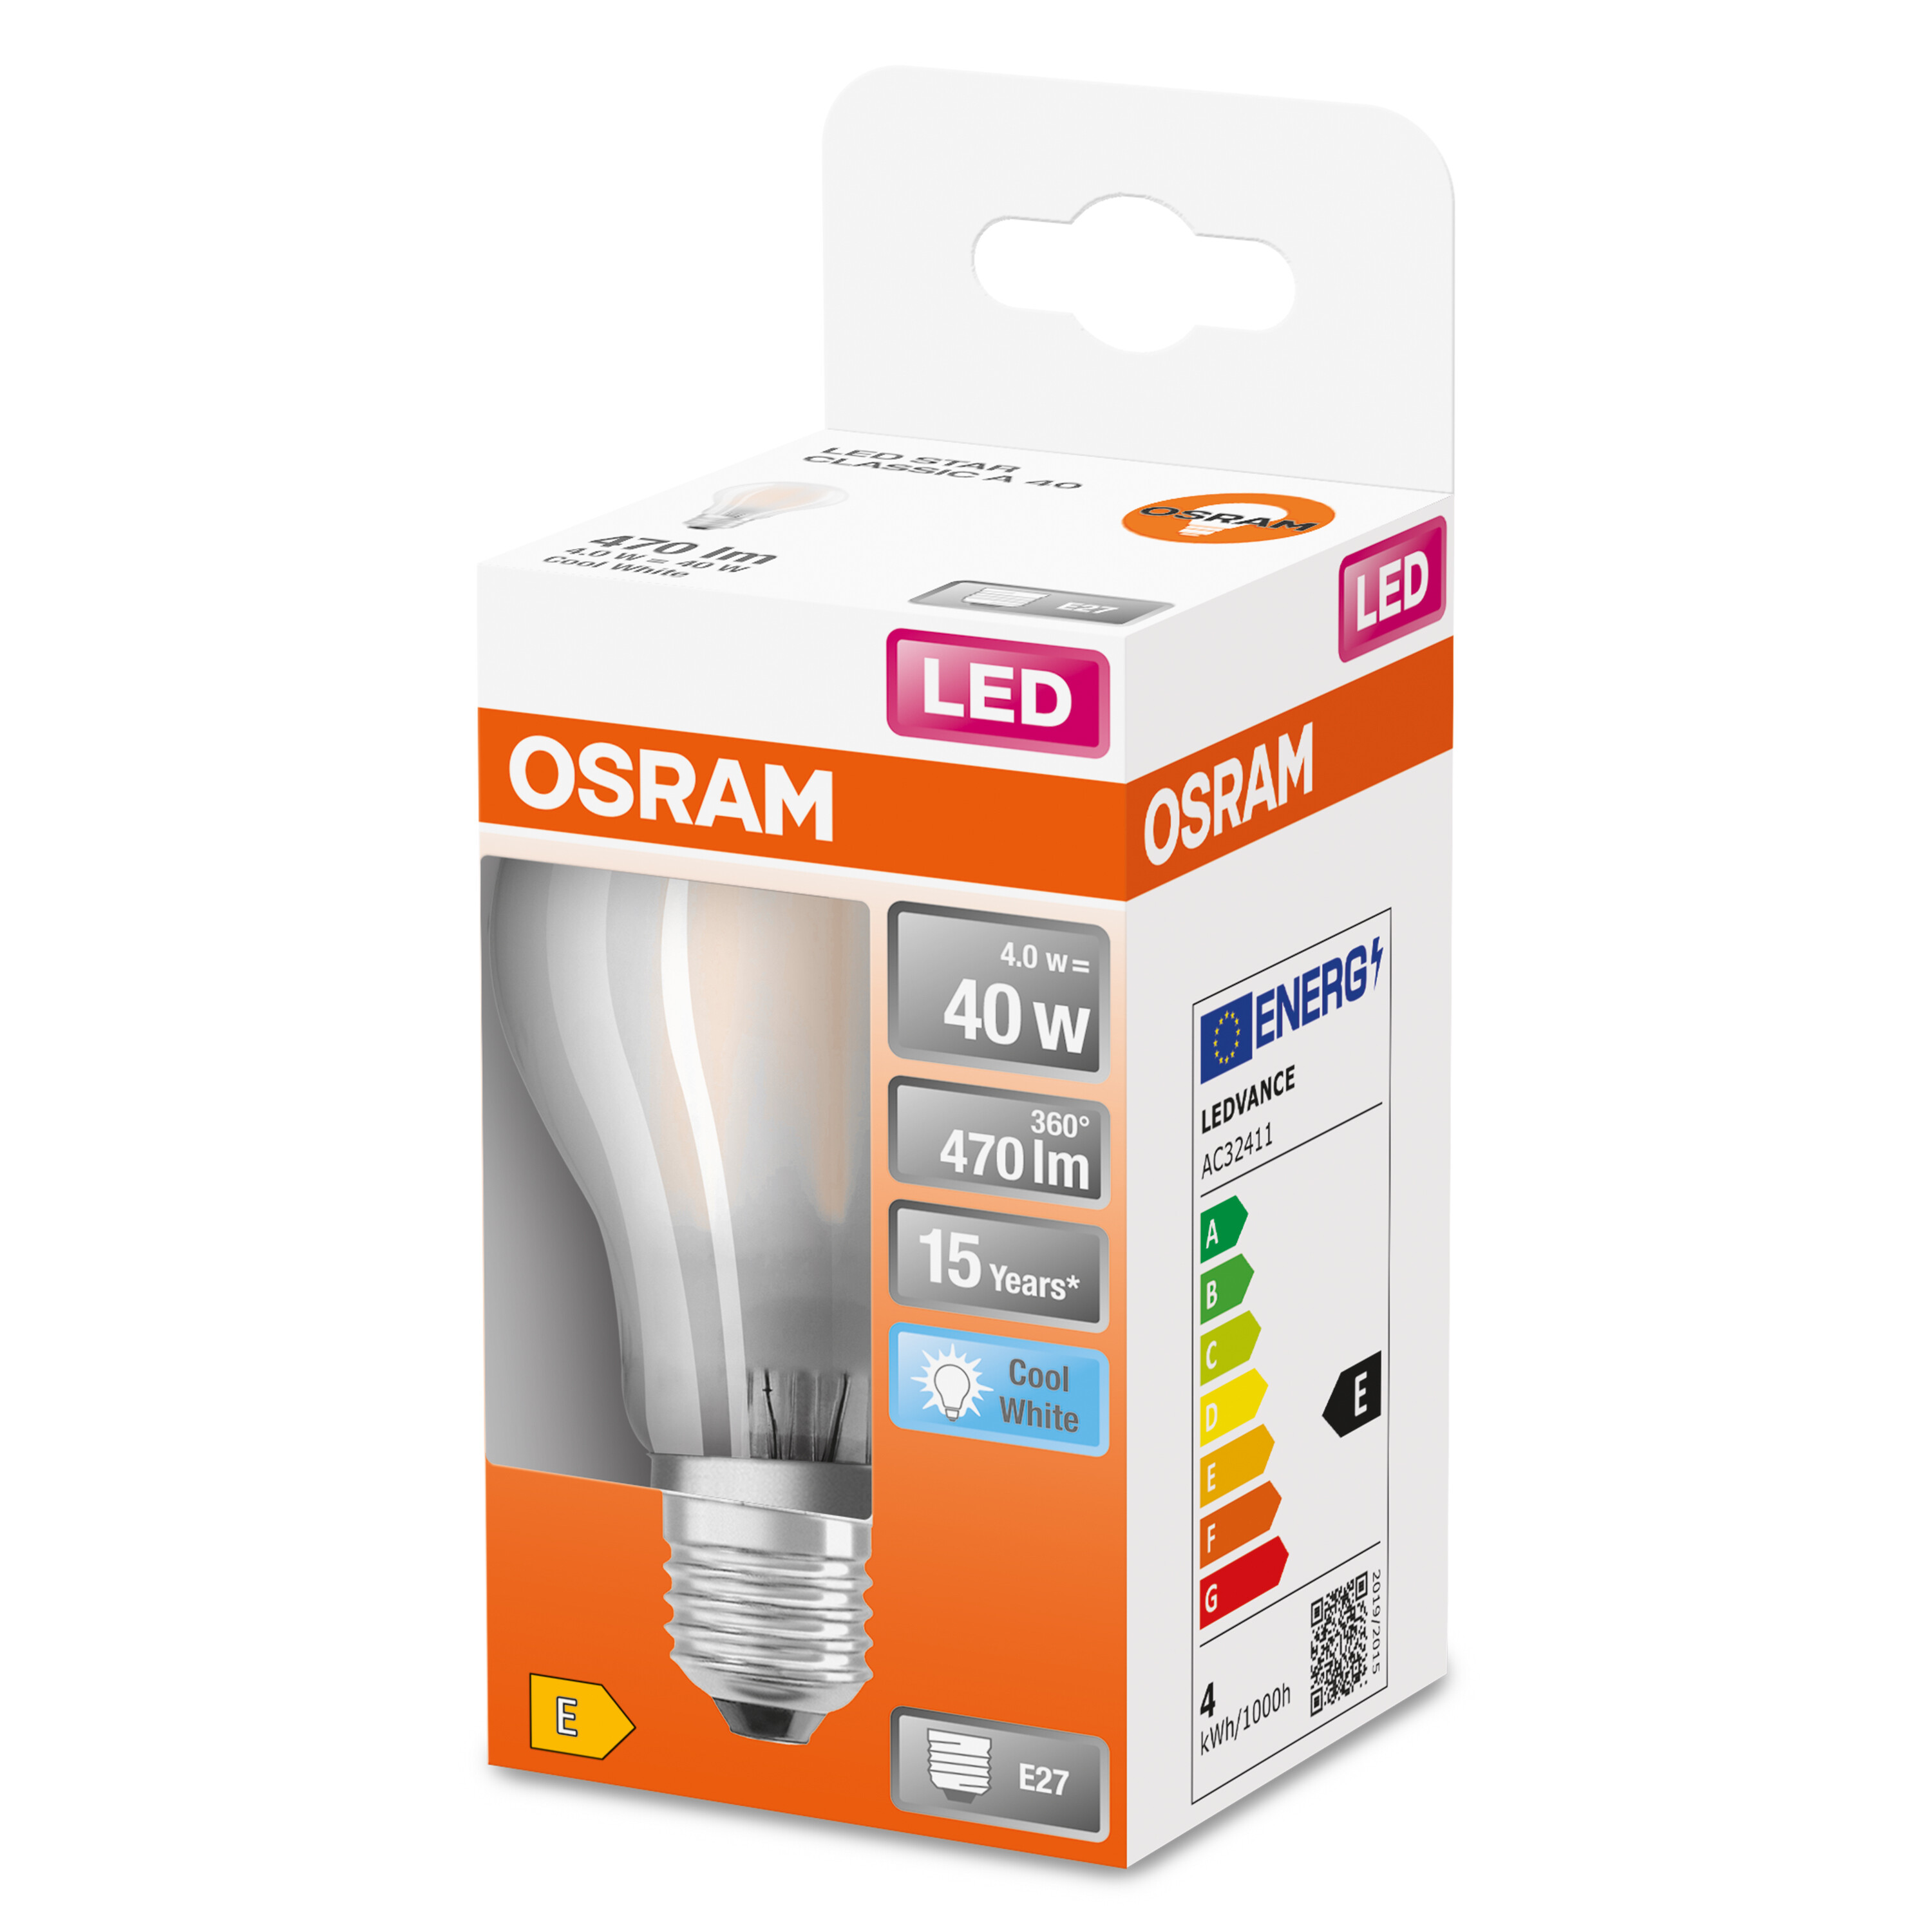 OSRAM  LED Retrofit 470 Lampe CLASSIC Lumen LED Kaltweiß A